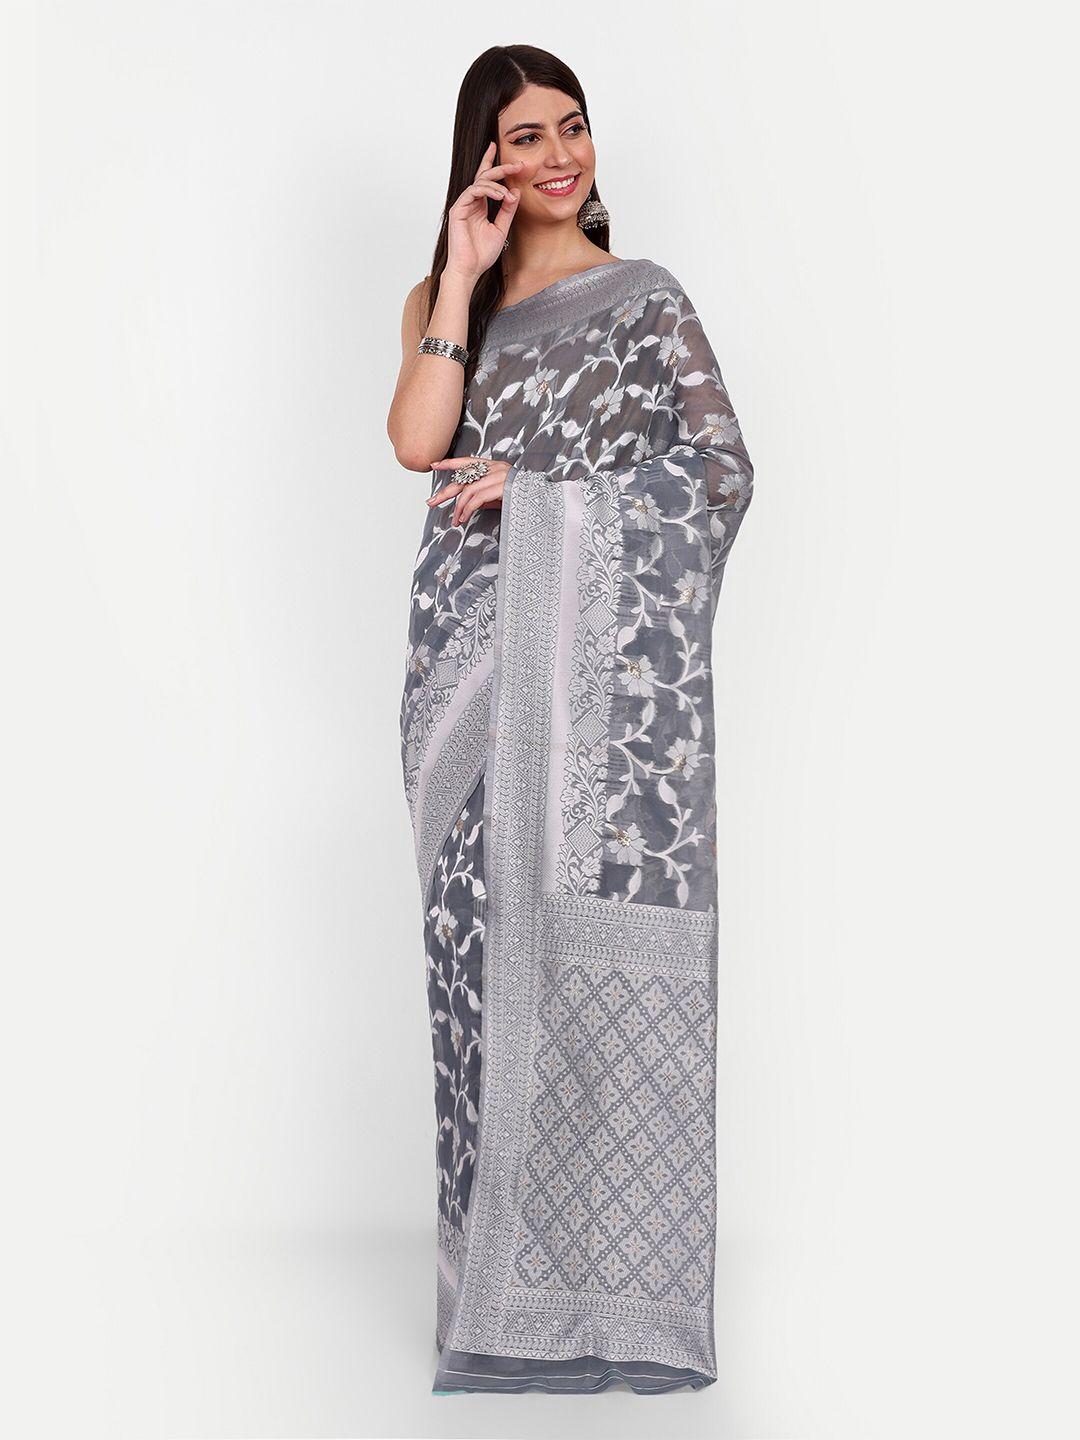 jinal-&-jinal-ethnic-motifs-woven-design-chanderi-saree